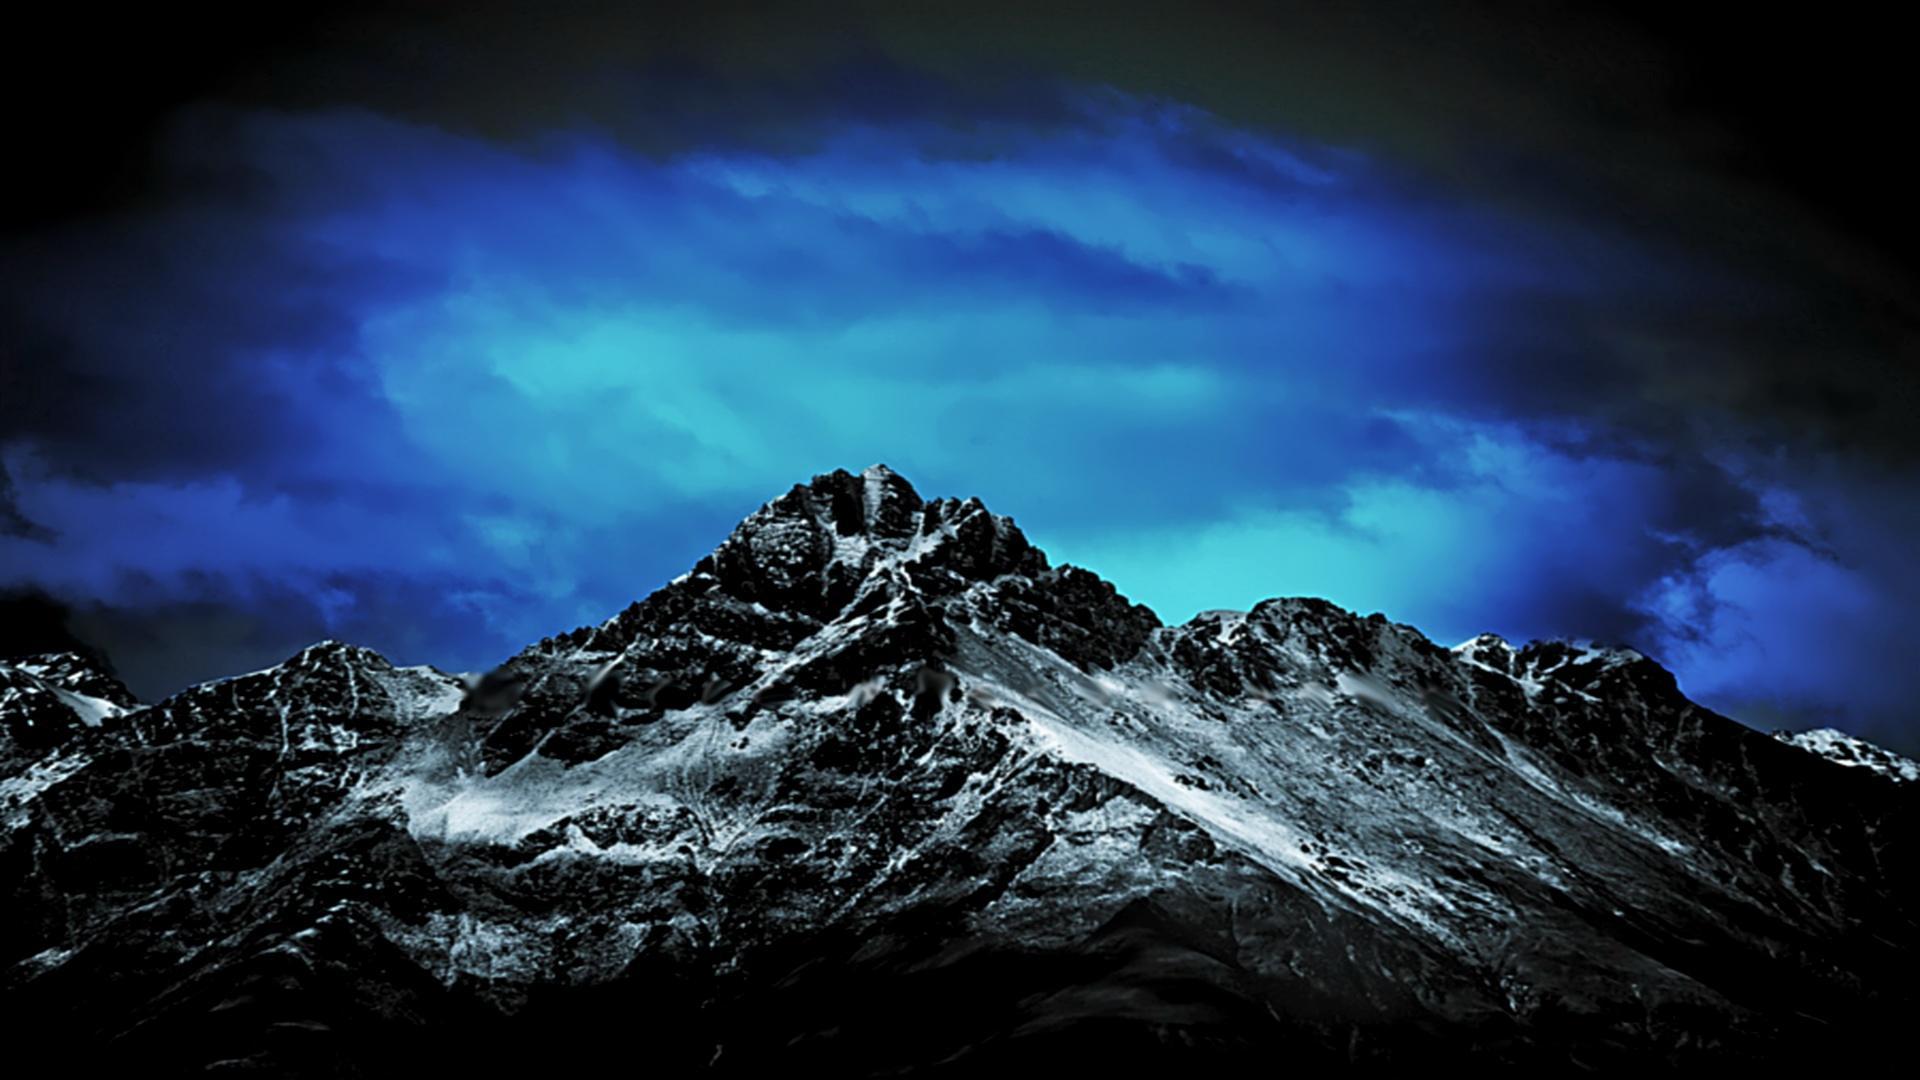 Blue Mountain Desktop Wallpaper